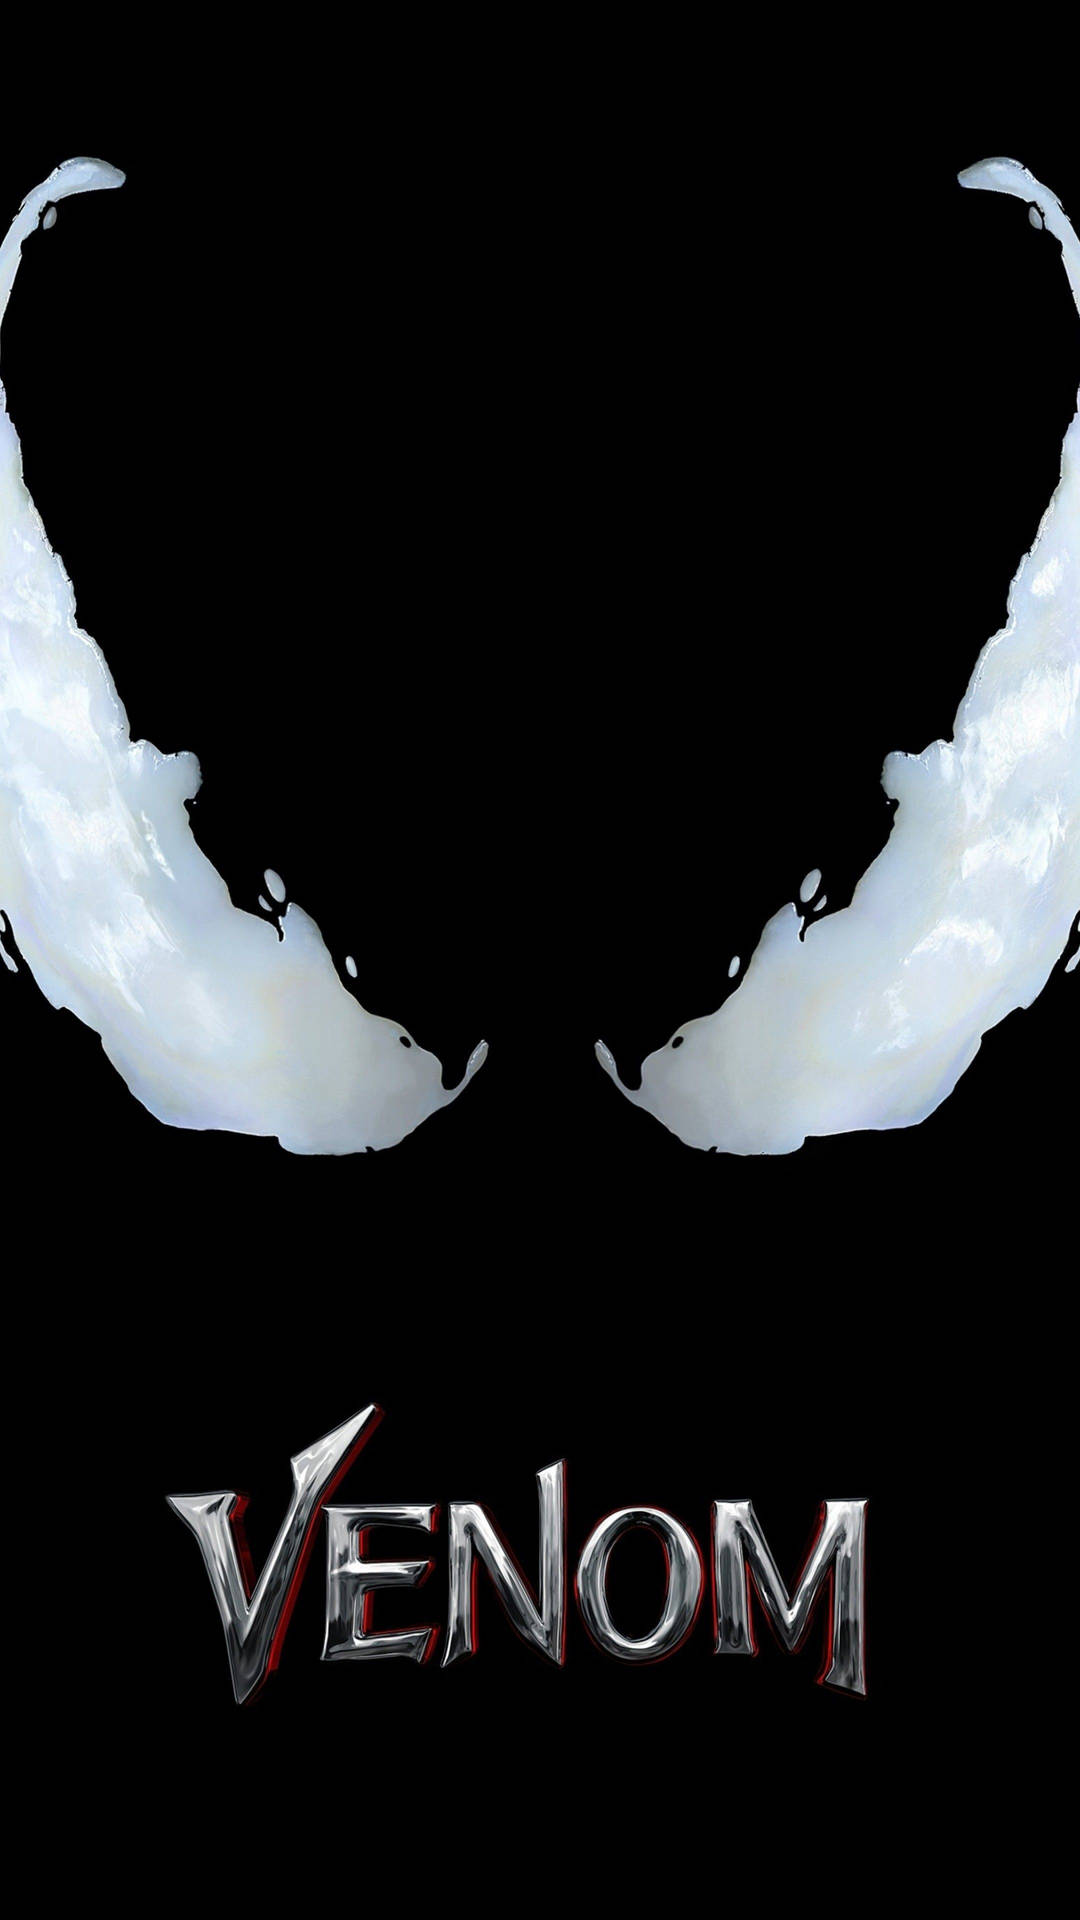 Venom Movie 2018 Poster Background